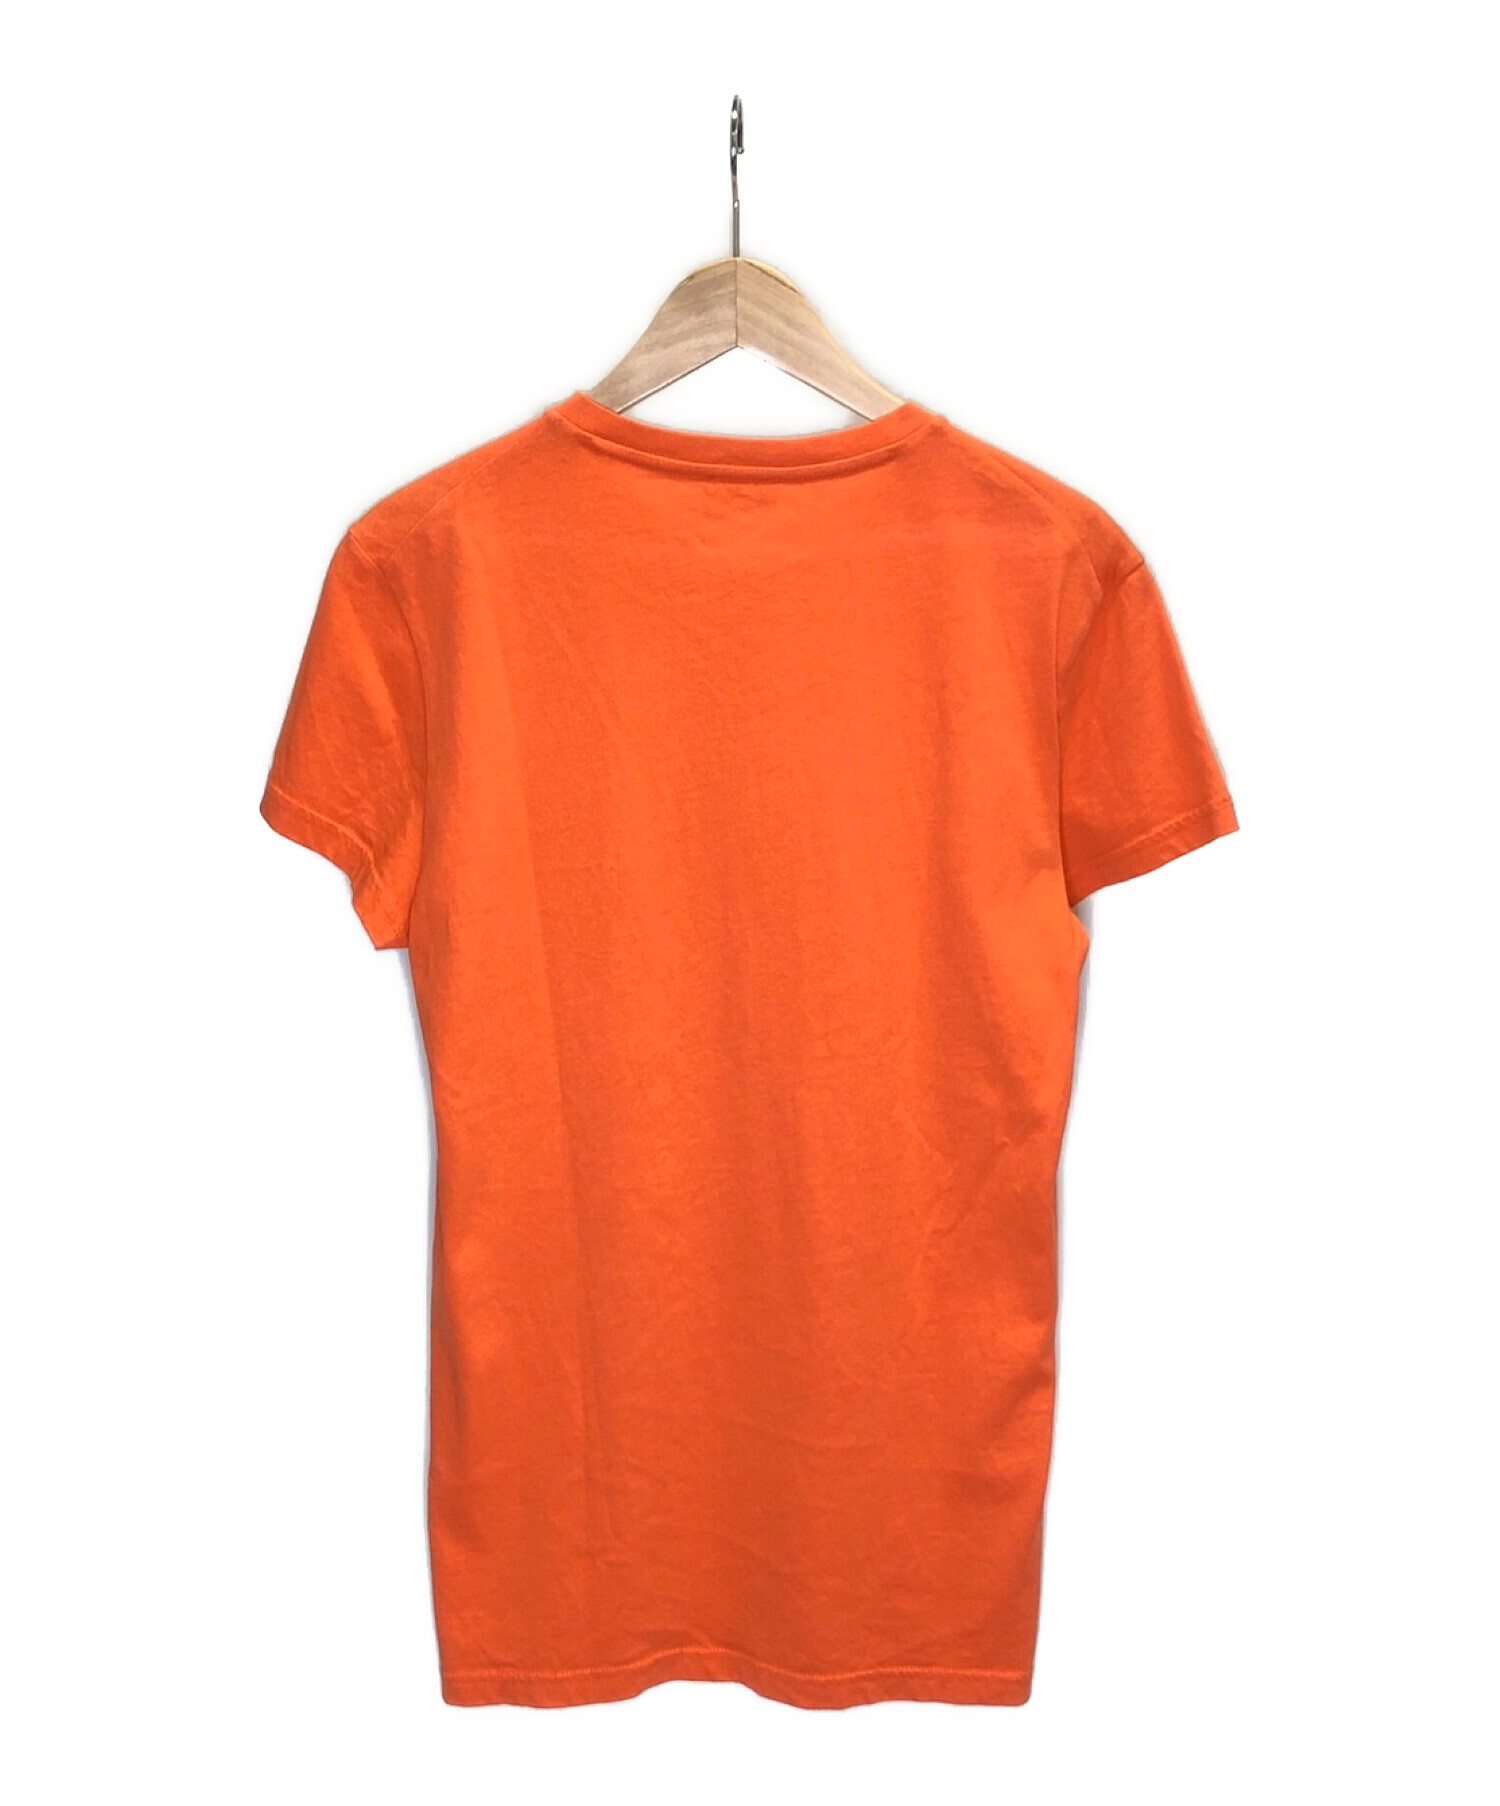 JIL SANDER (ジルサンダー) VネックTシャツ オレンジ サイズ:S